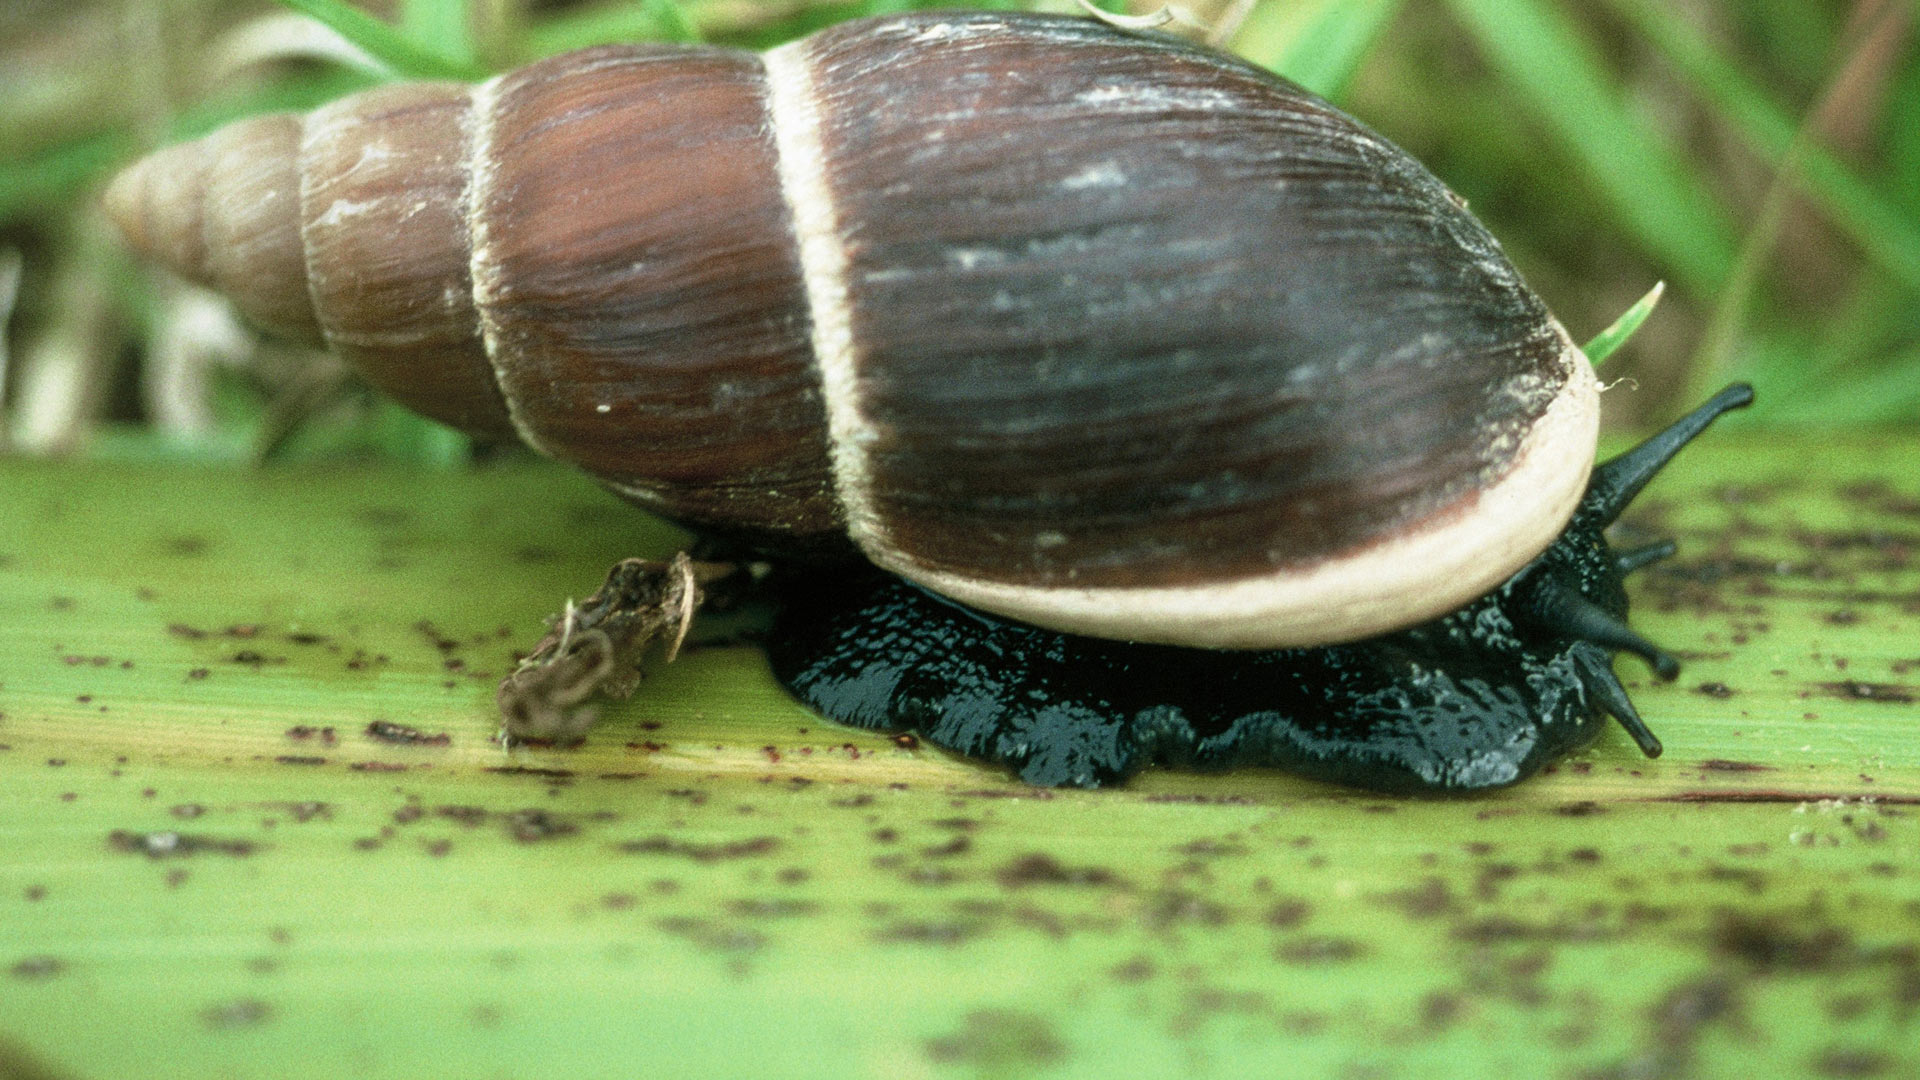 Flax snail/pupurangi: Invertebrates